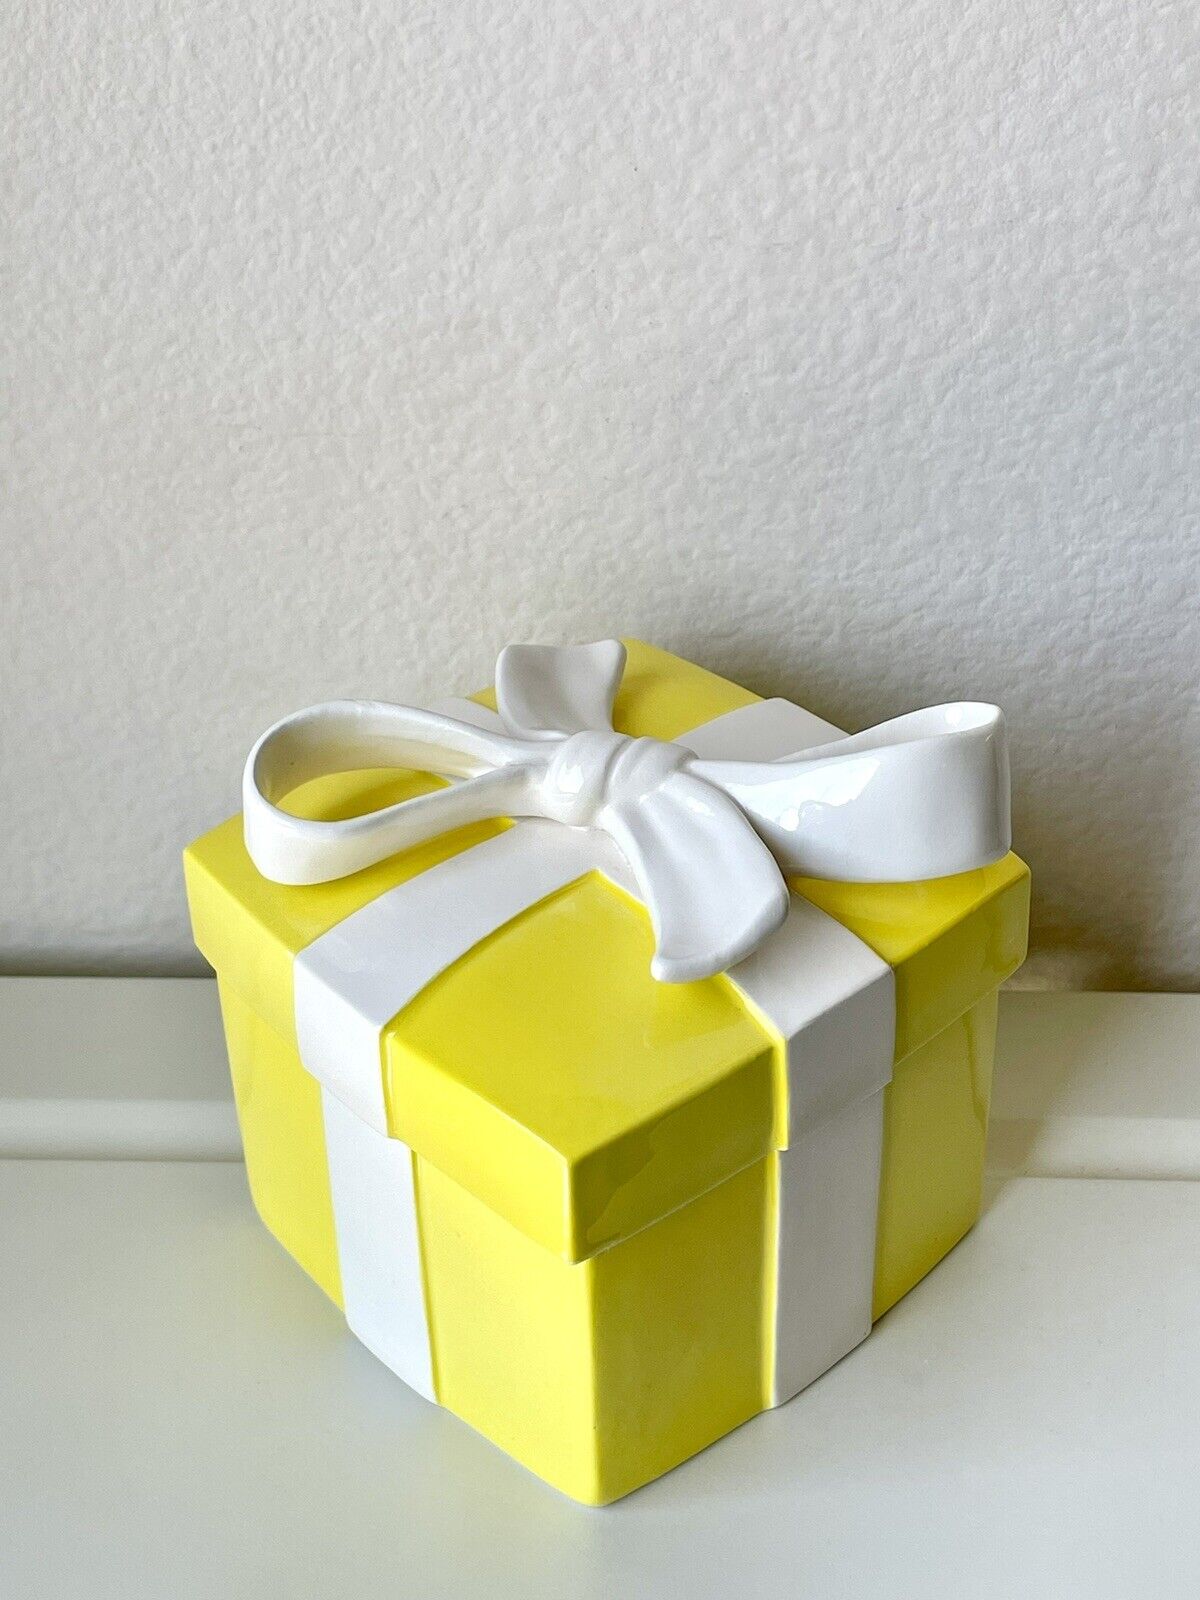 Fitz and Floyd Ceramic Yellow Gift Box w/White Bow Trinket/Keepsake Box 4